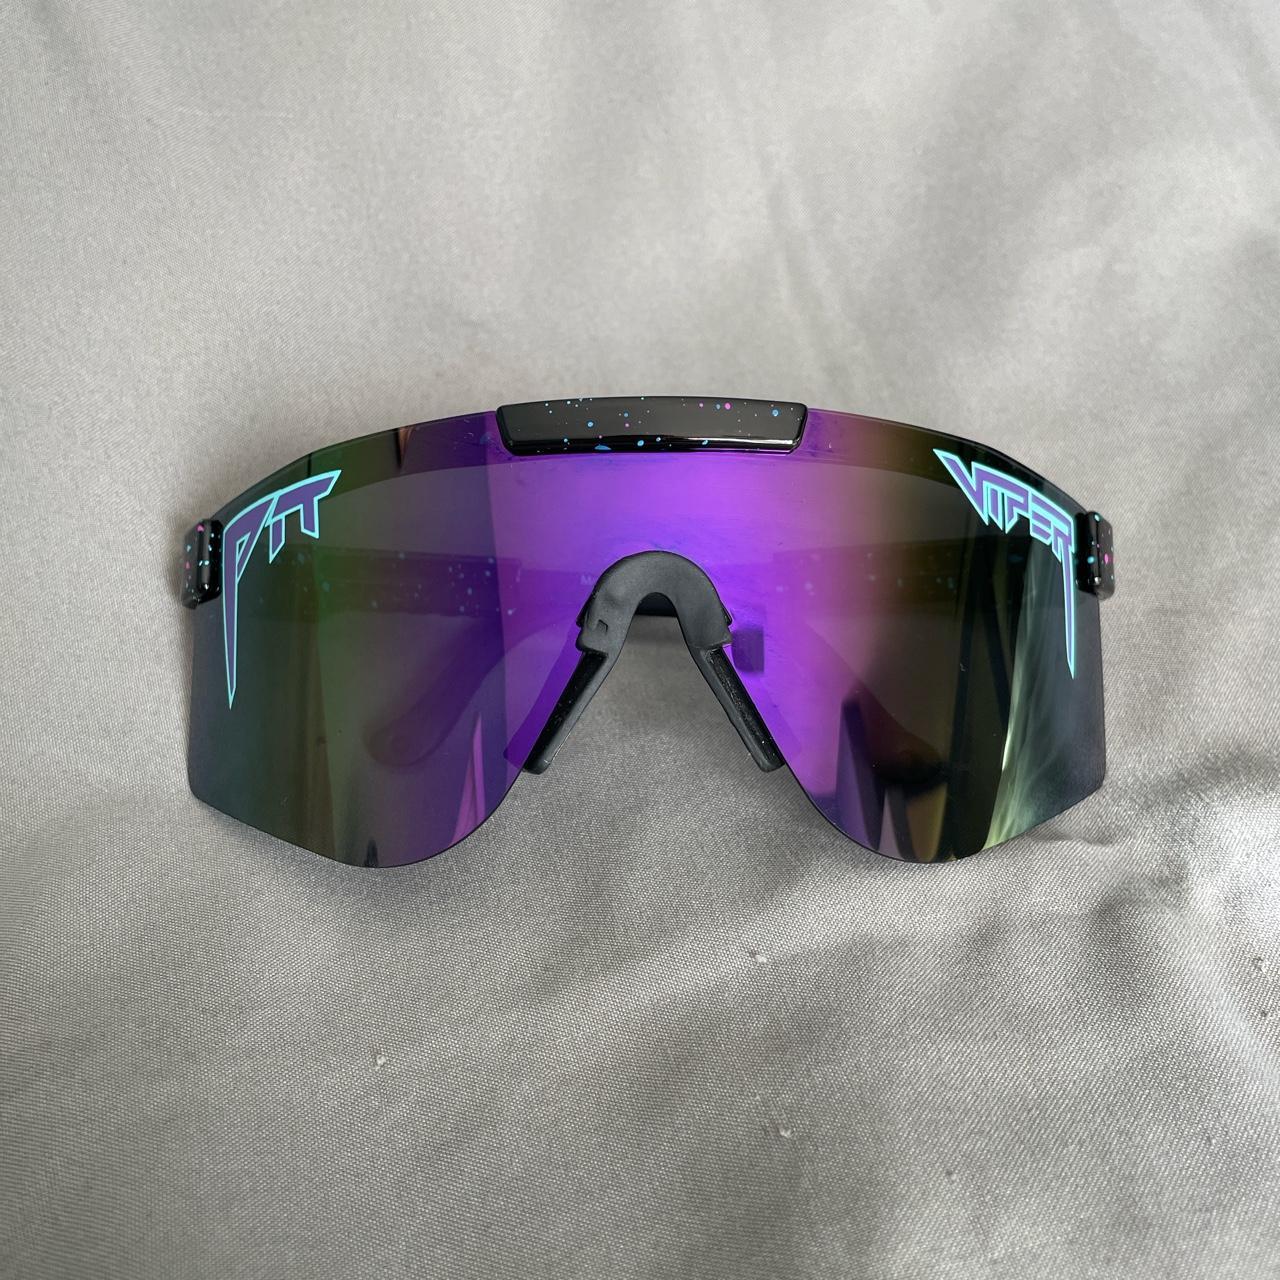 Pit Viper - The Night Fall Polarized – Shades Sunglasses